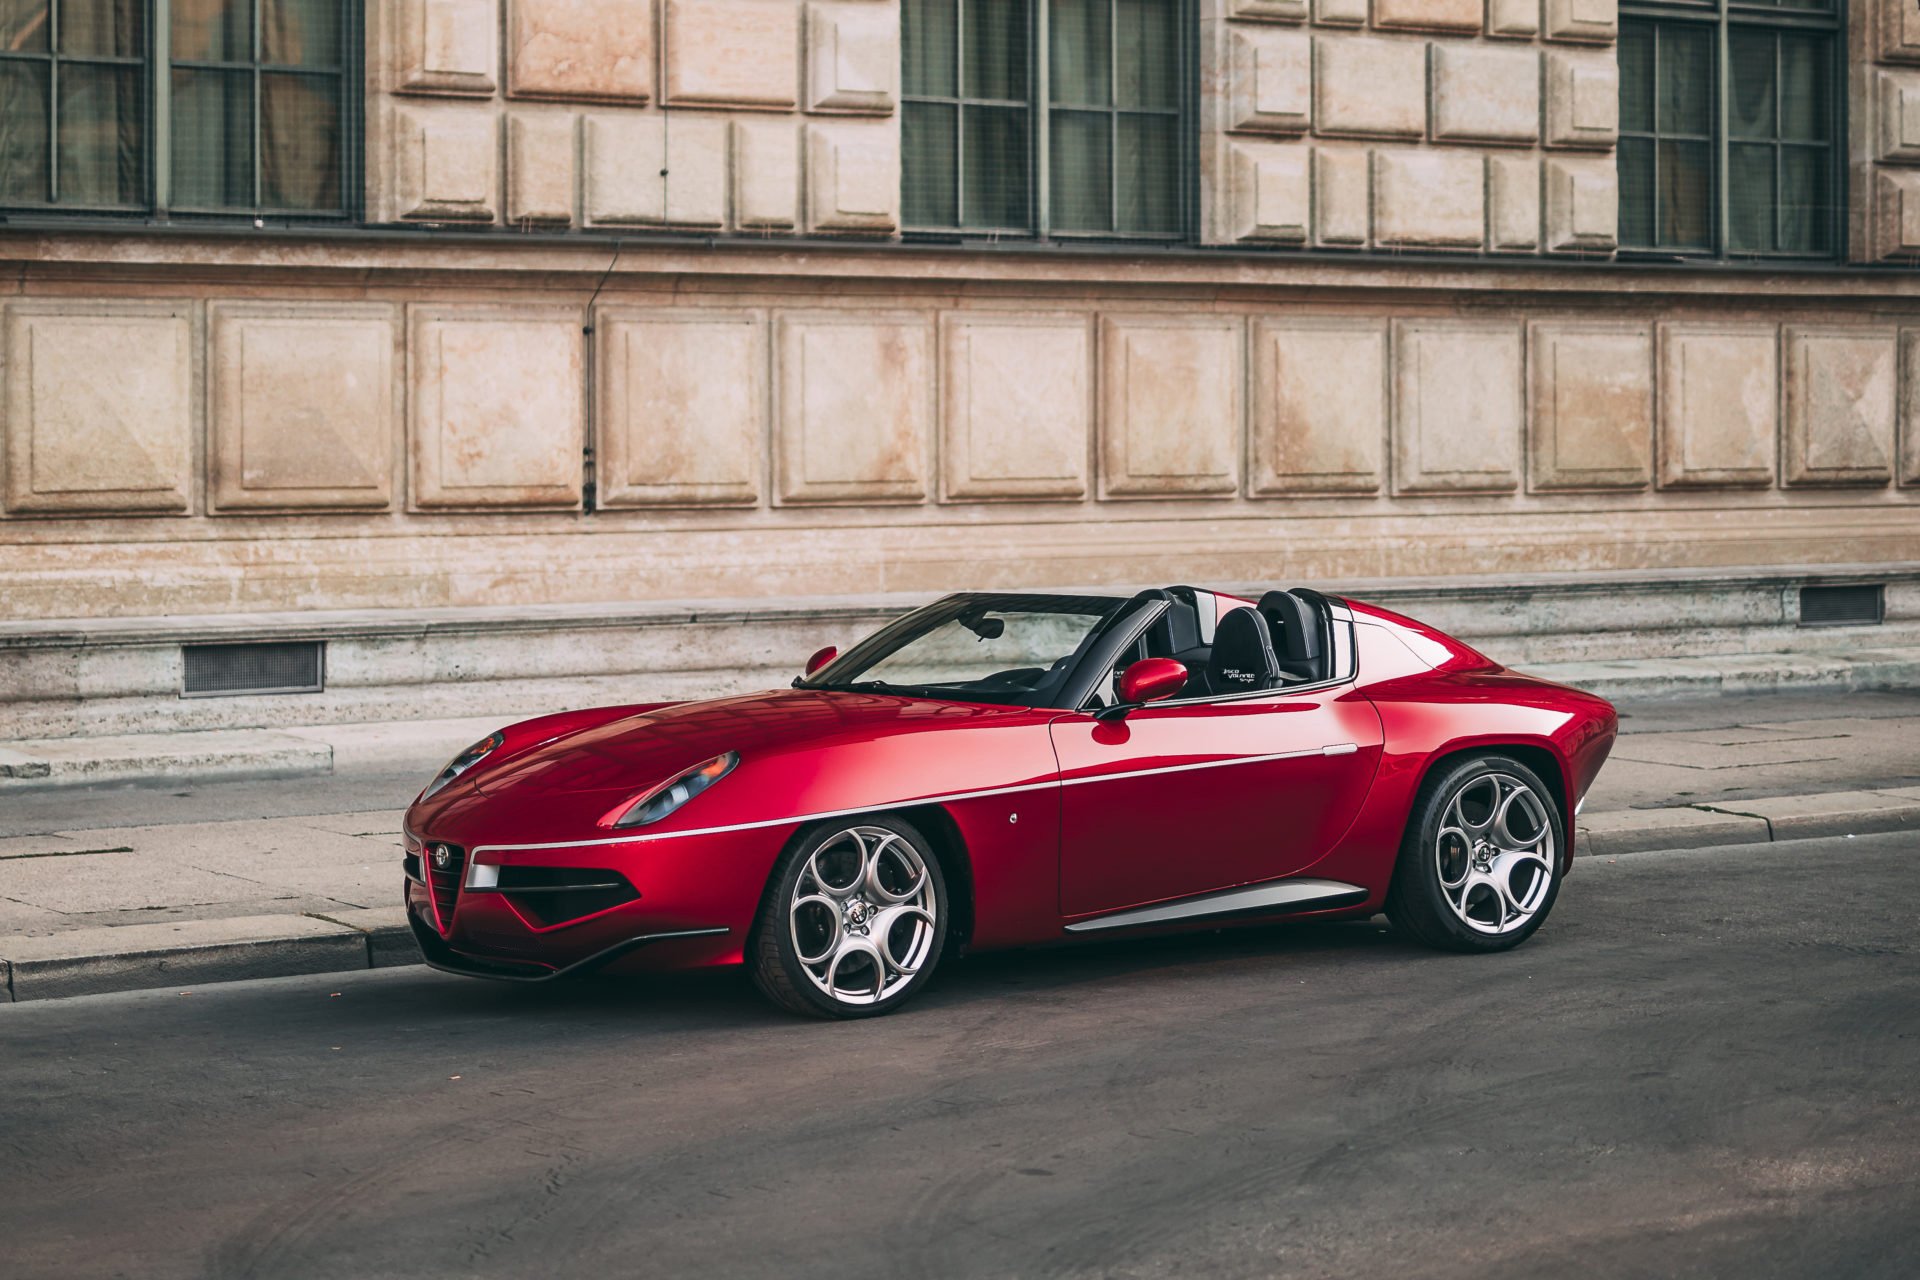 The Alfa Romeo Disco Spyder by Superleggera